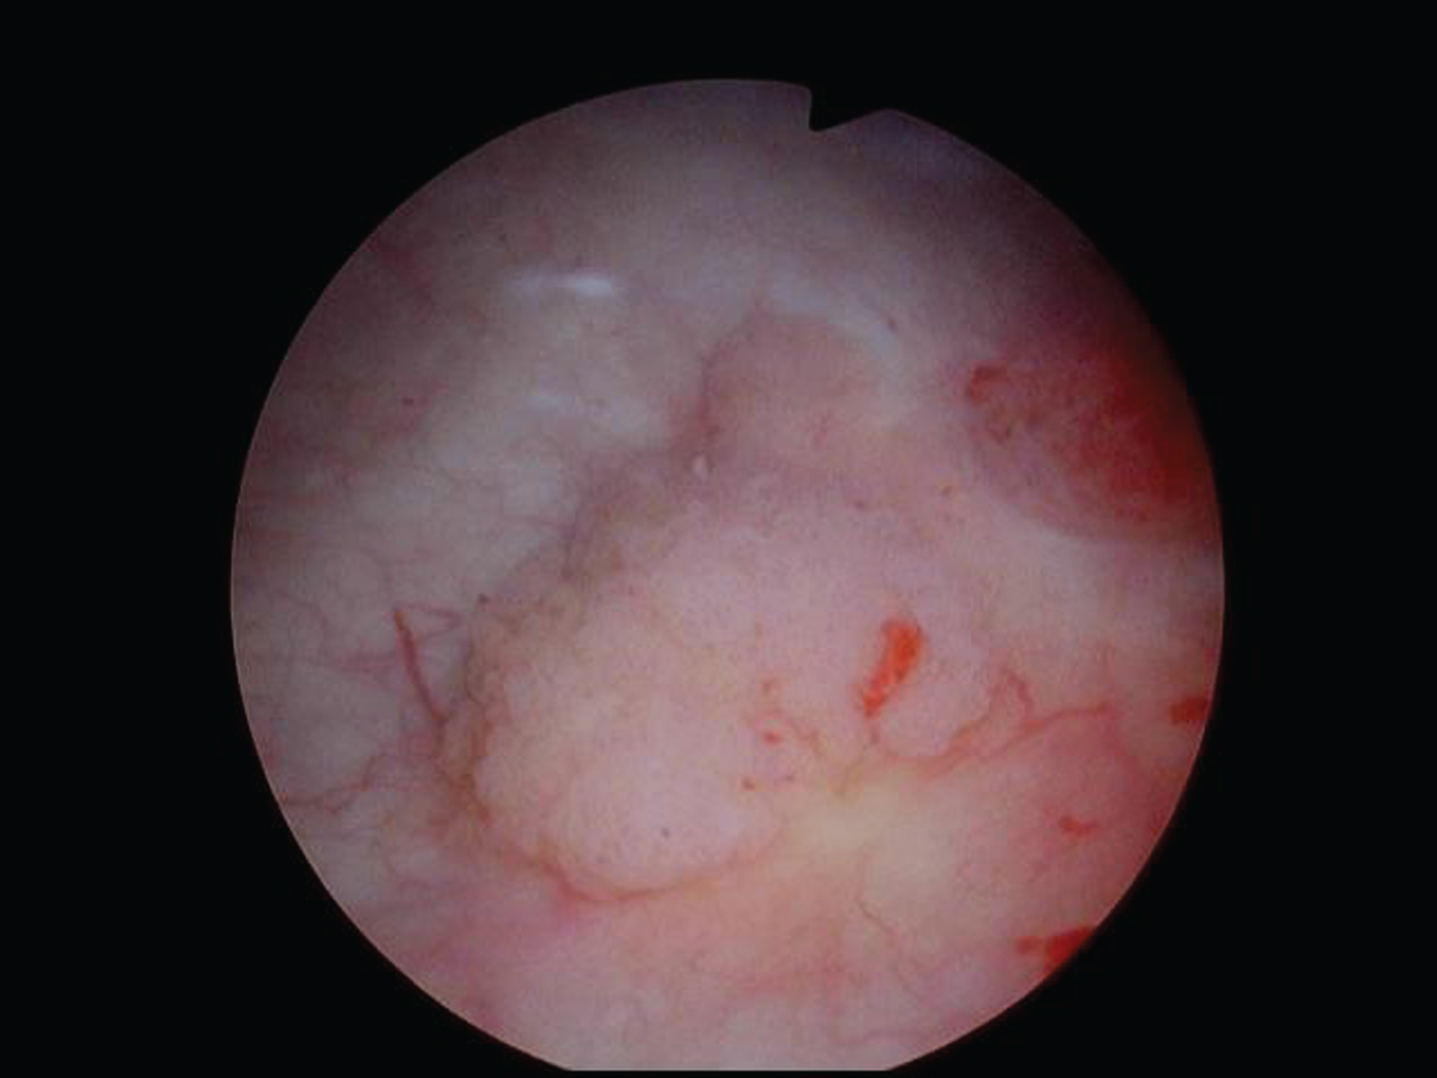 Papillary Ta appearing tumor. One of multiple similar appearing tumors.